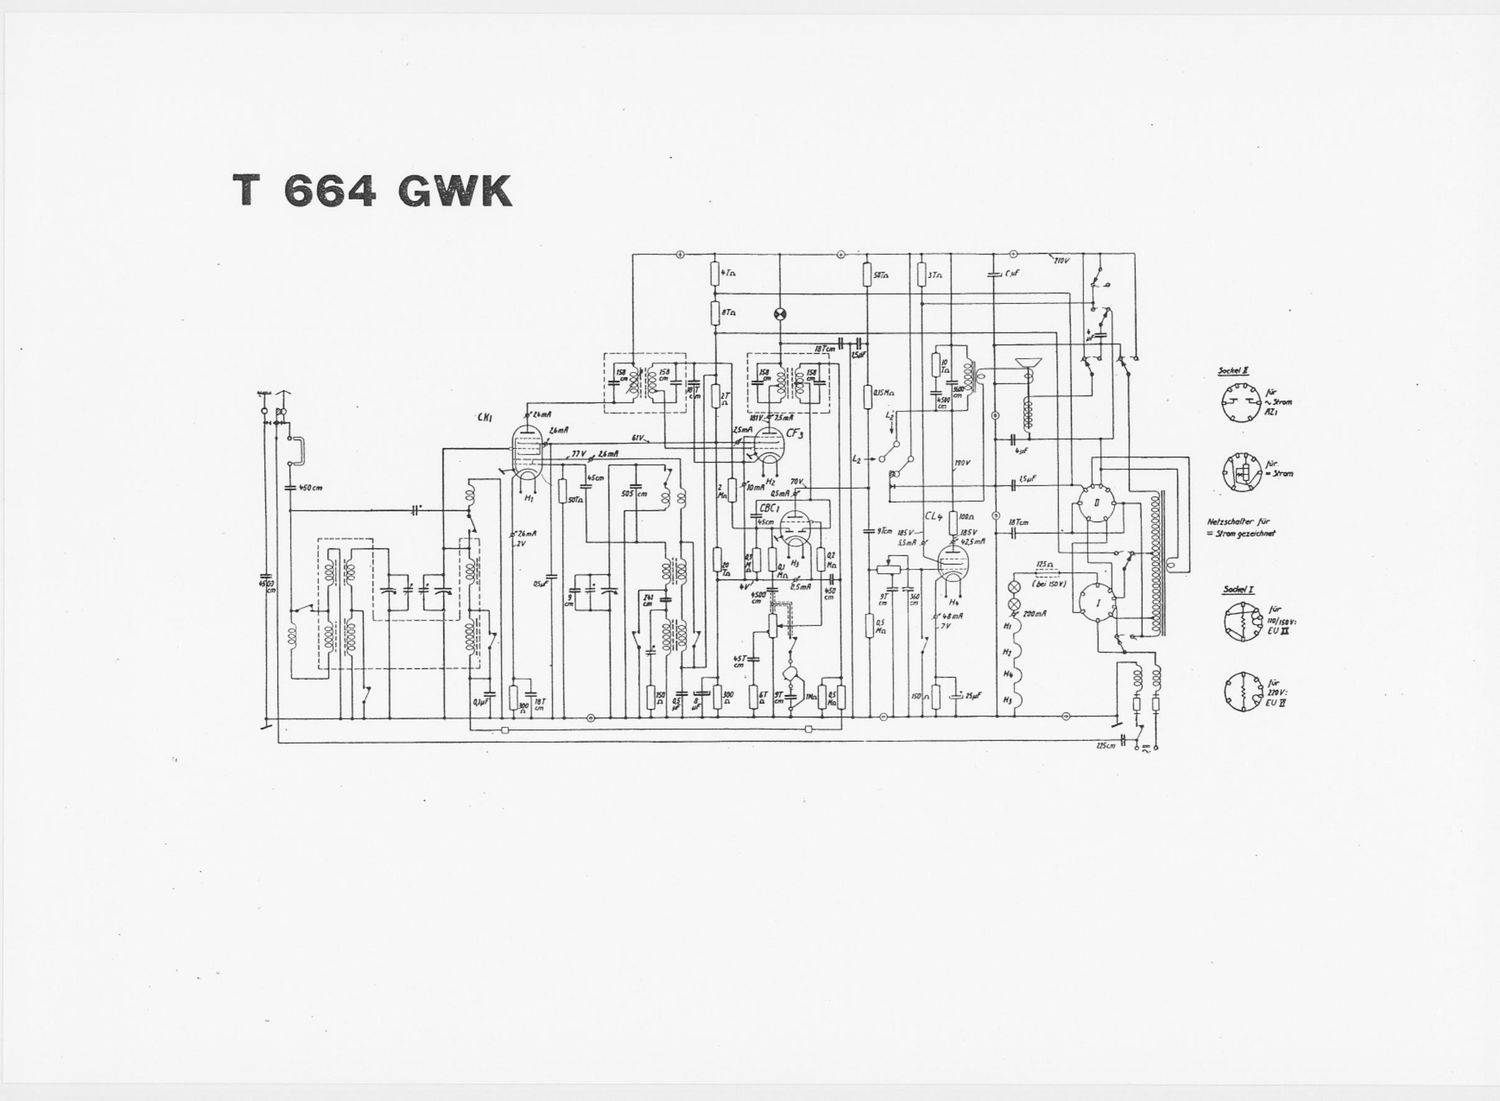 Telefunken 664 GWK Schematic